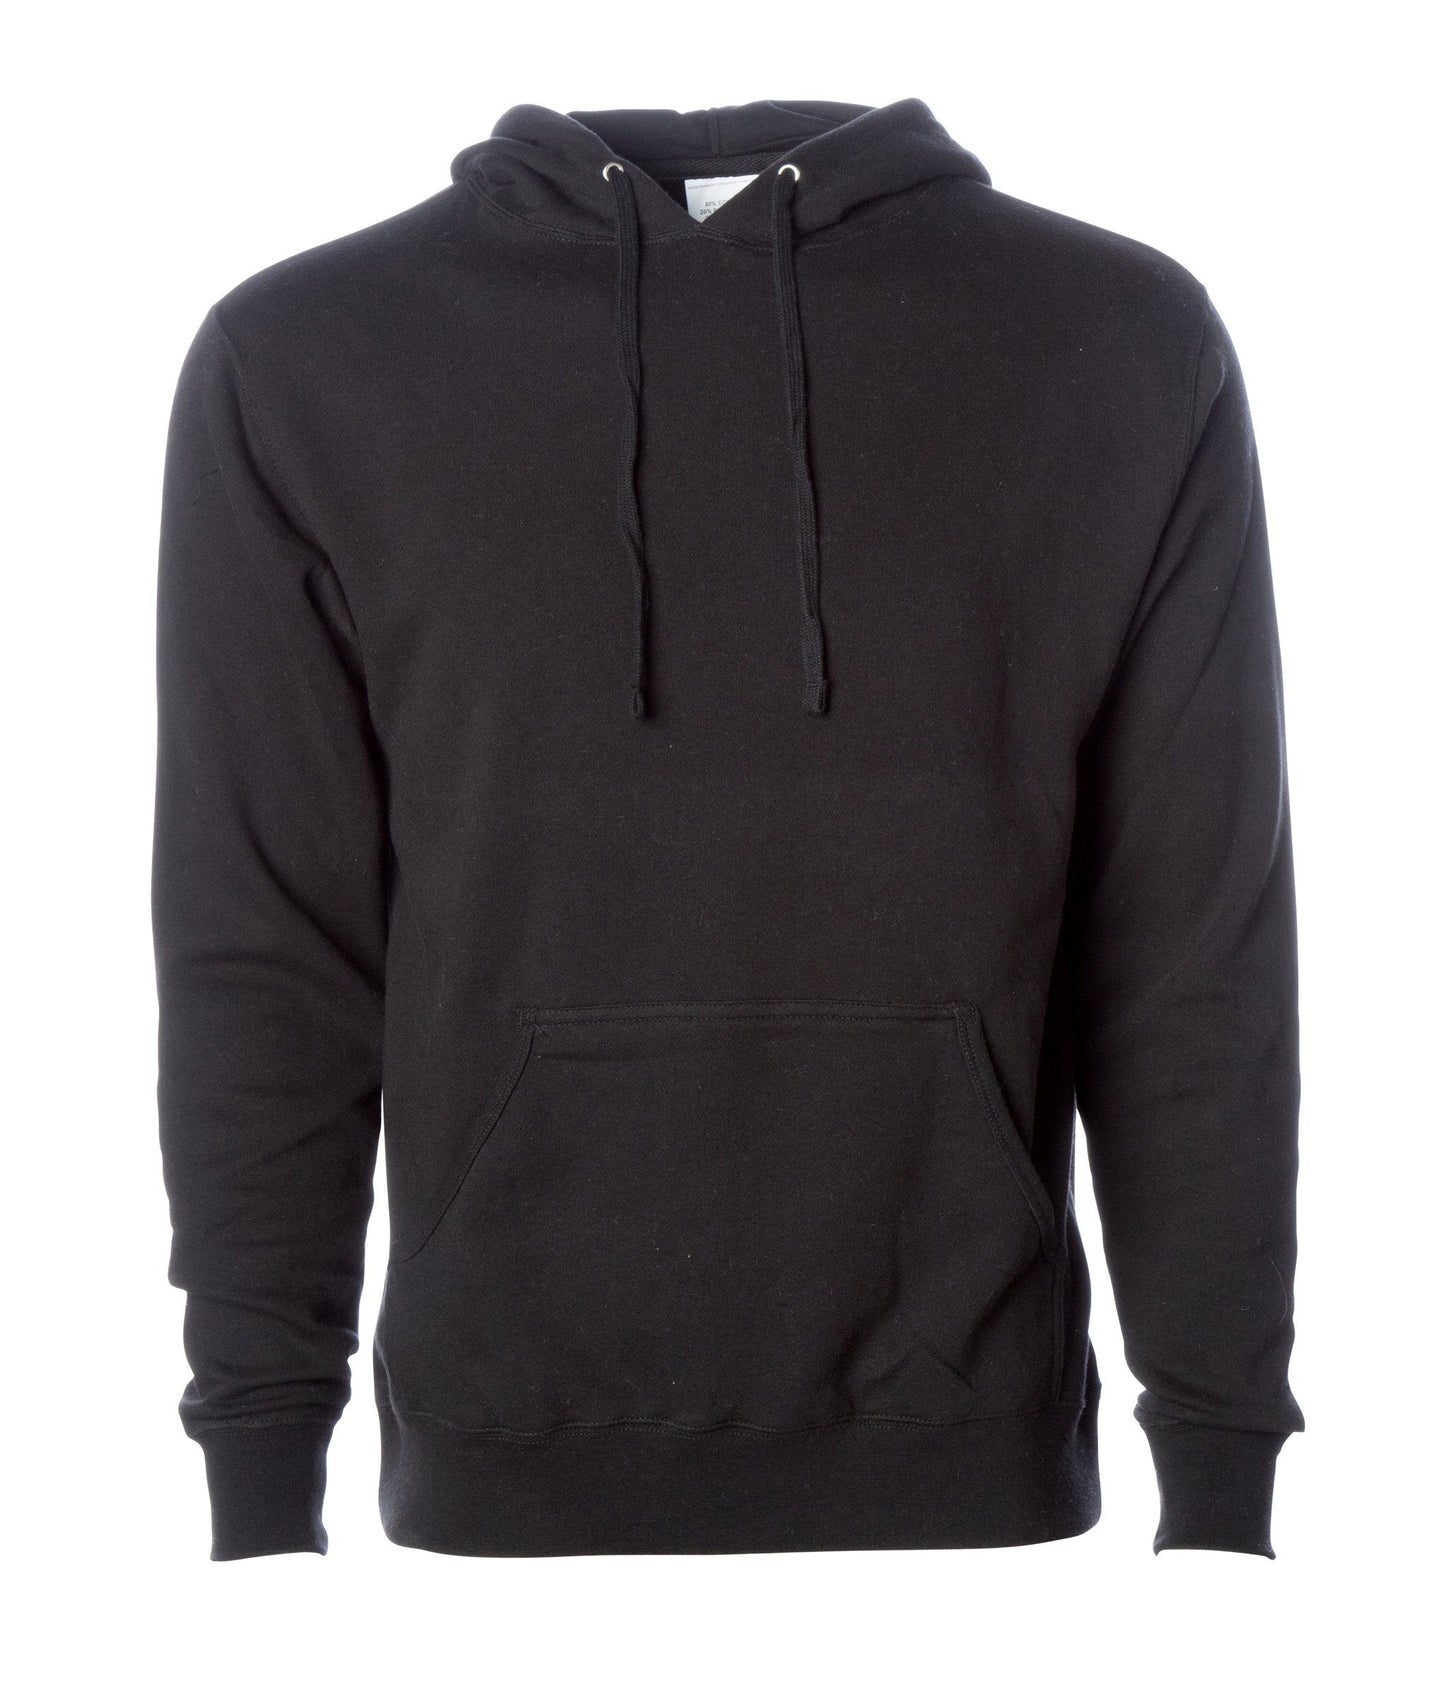 AFX4000 Lightweight Hooded Pullover Sweatshirt - Black / XS